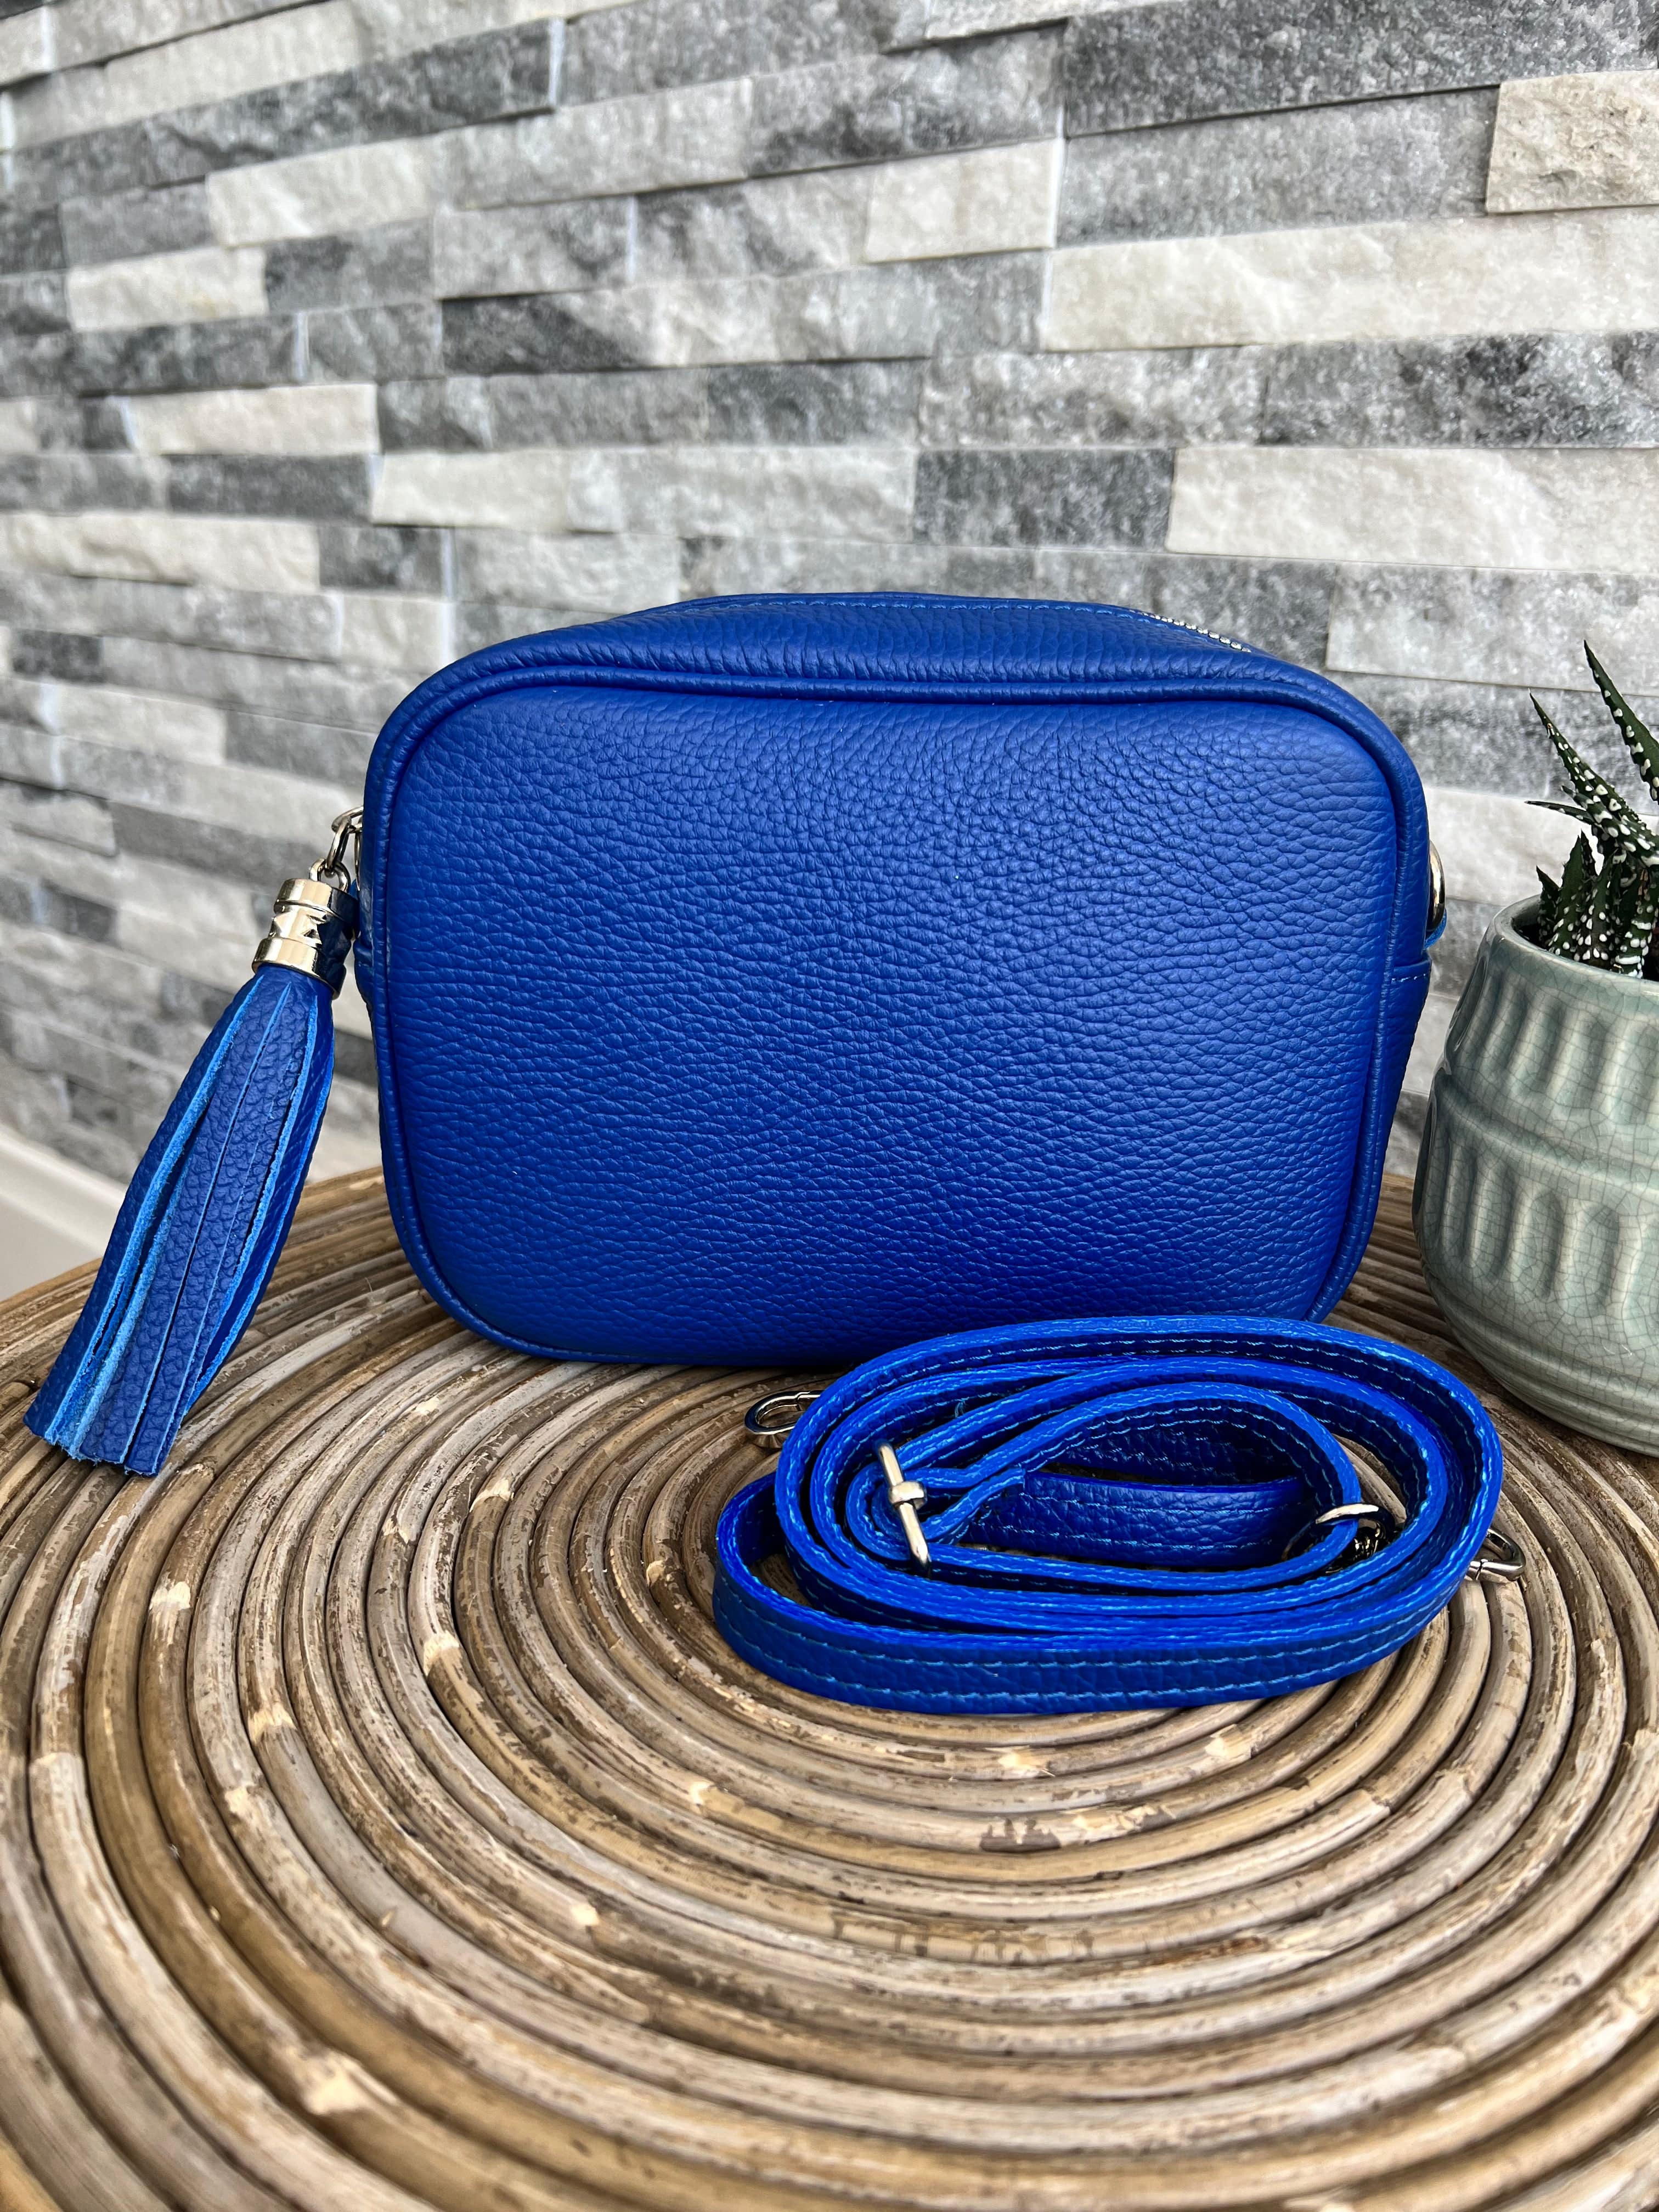 lusciousscarves Handbags Cobalt Blue Leather Camera Style Bag